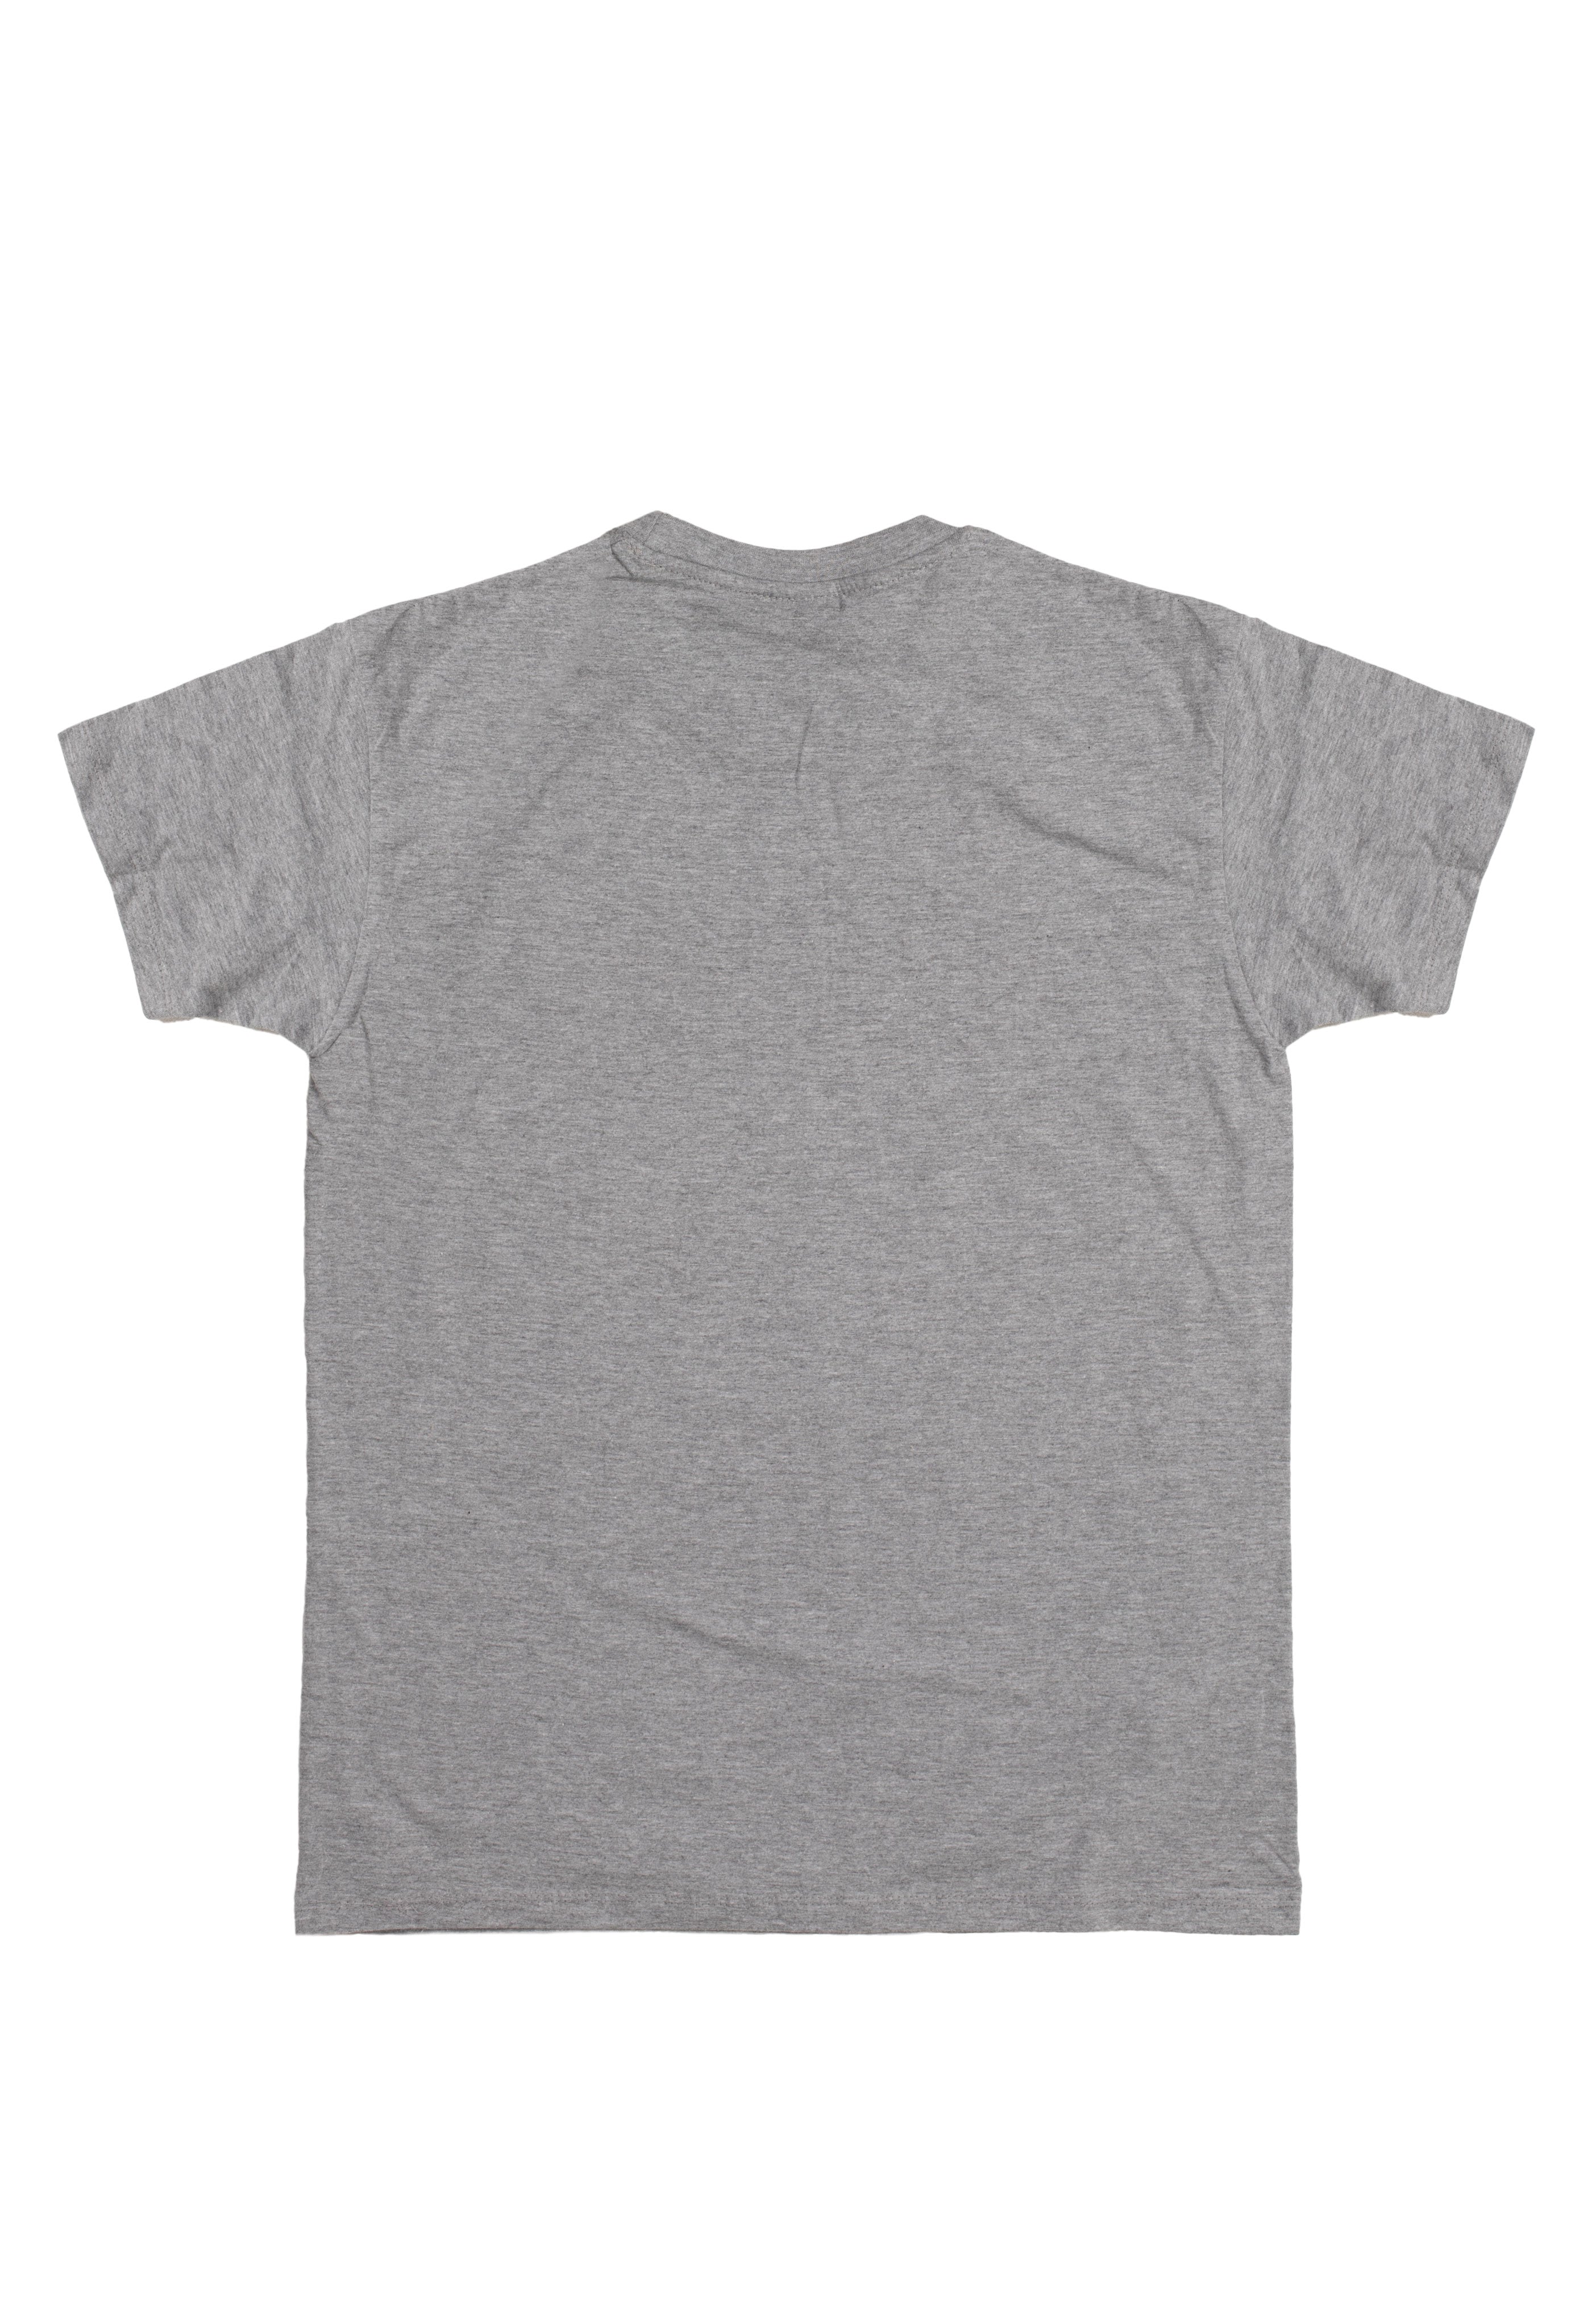 Blind Guardian - Battalions Of Fear Grey Melange - T-Shirt